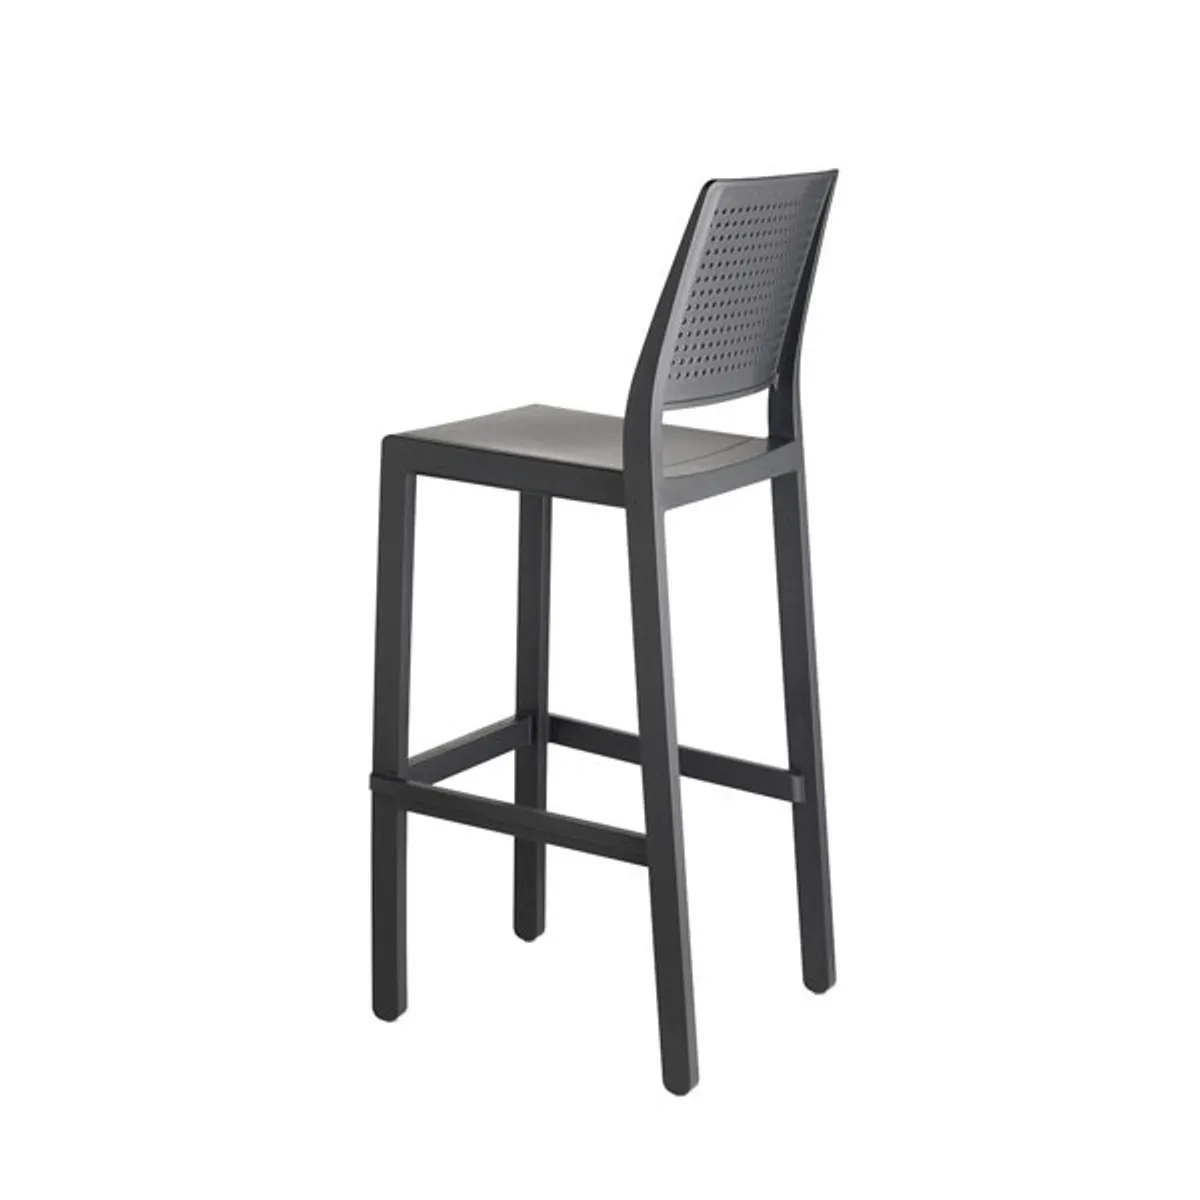 Remi dot bar stool 2345 6